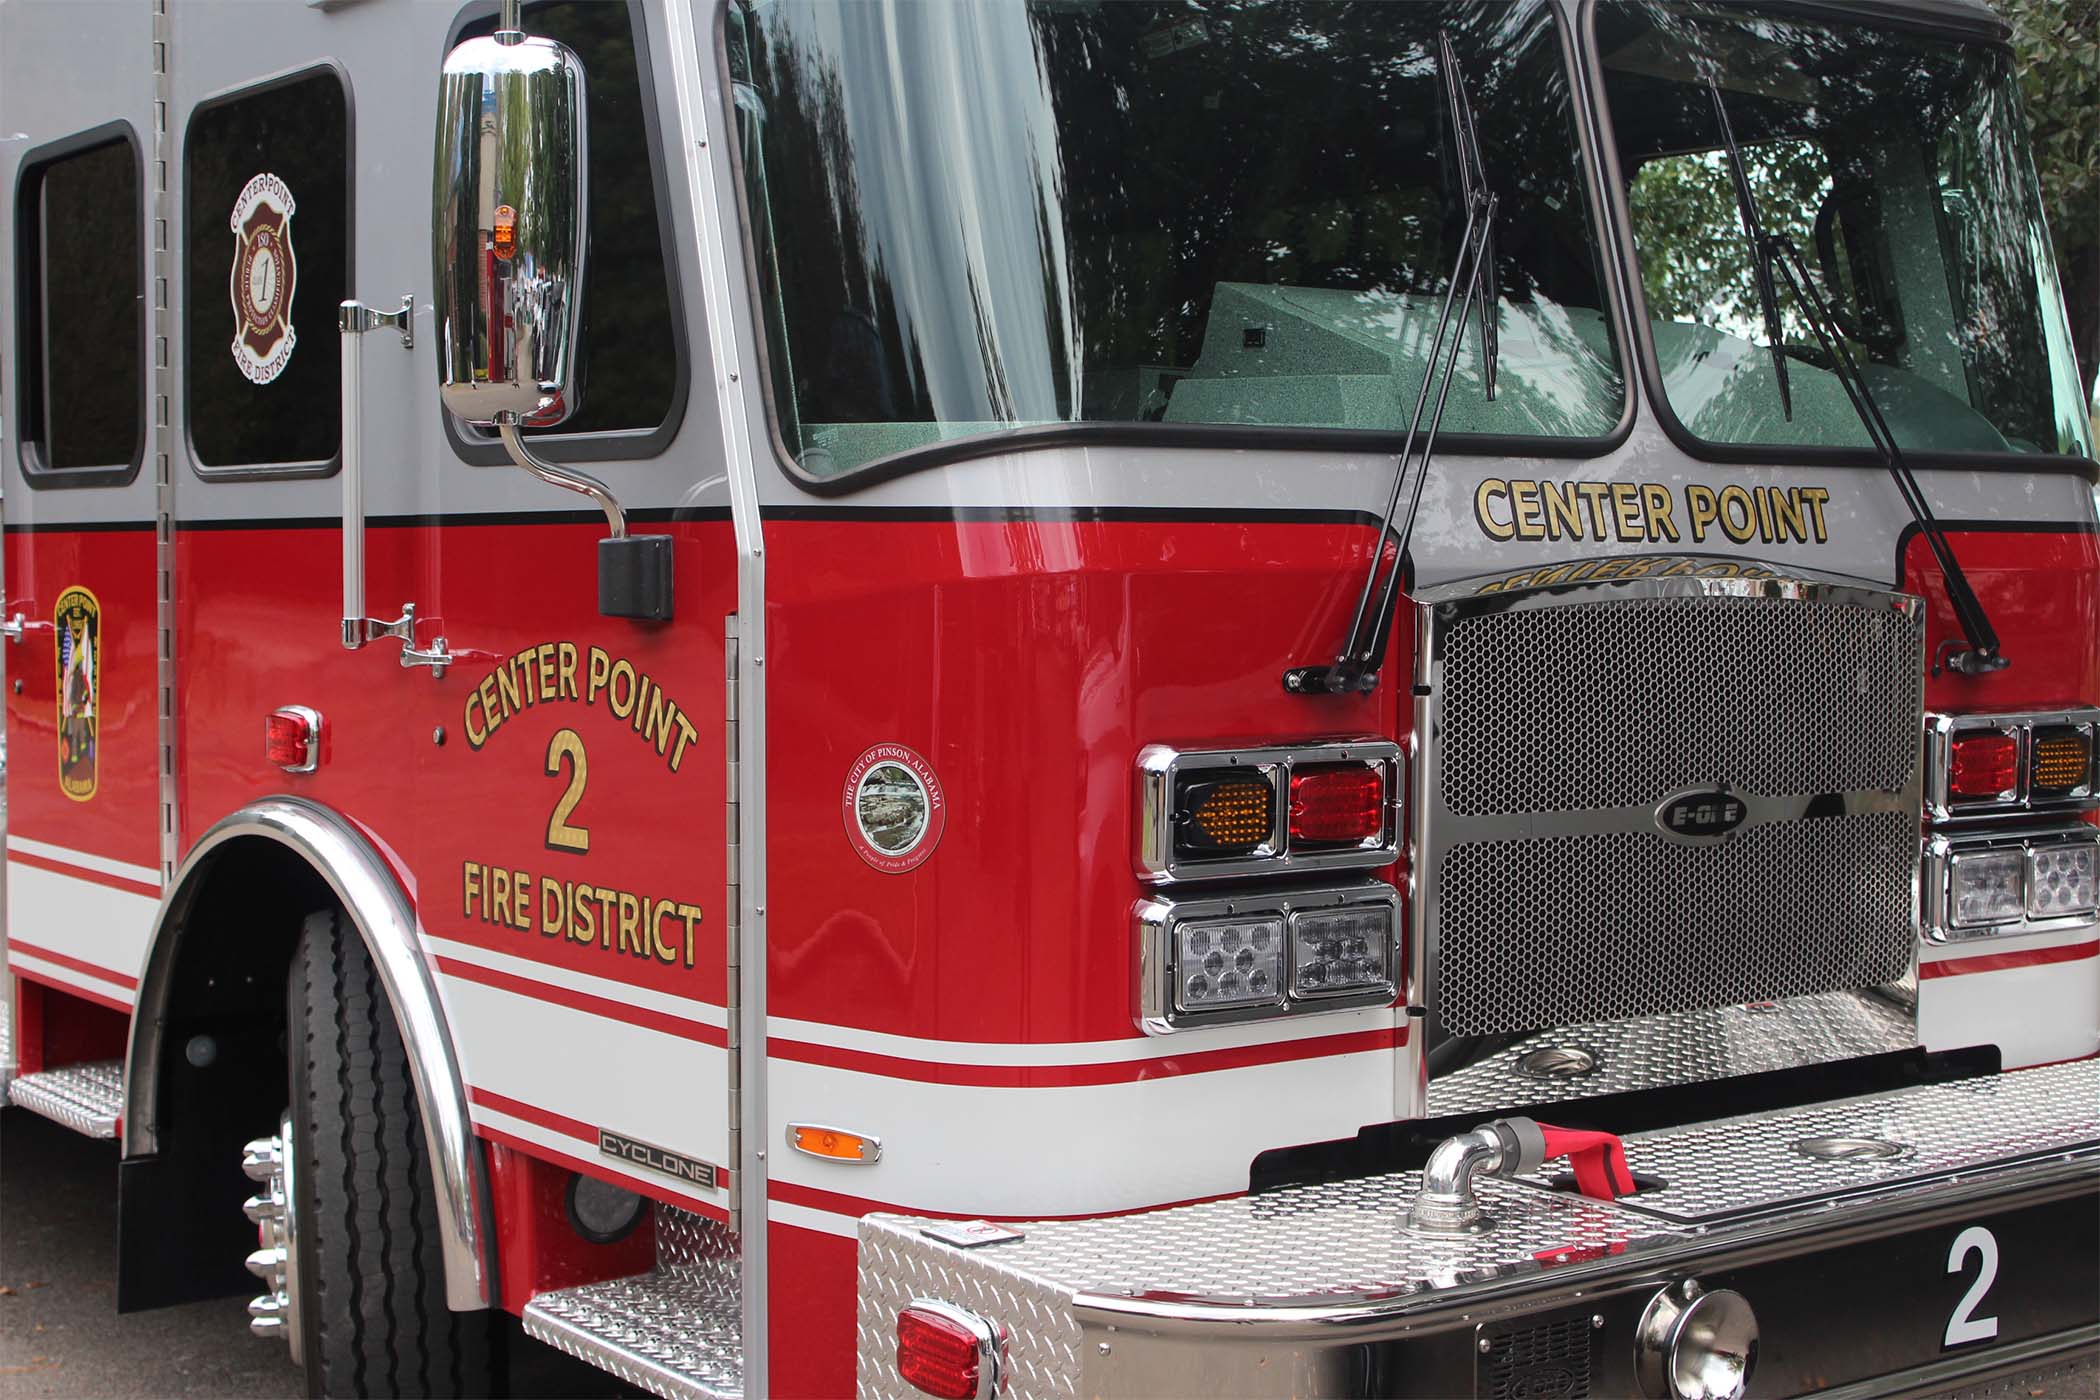 UPDATE: Center Point woman injured in house fire dies